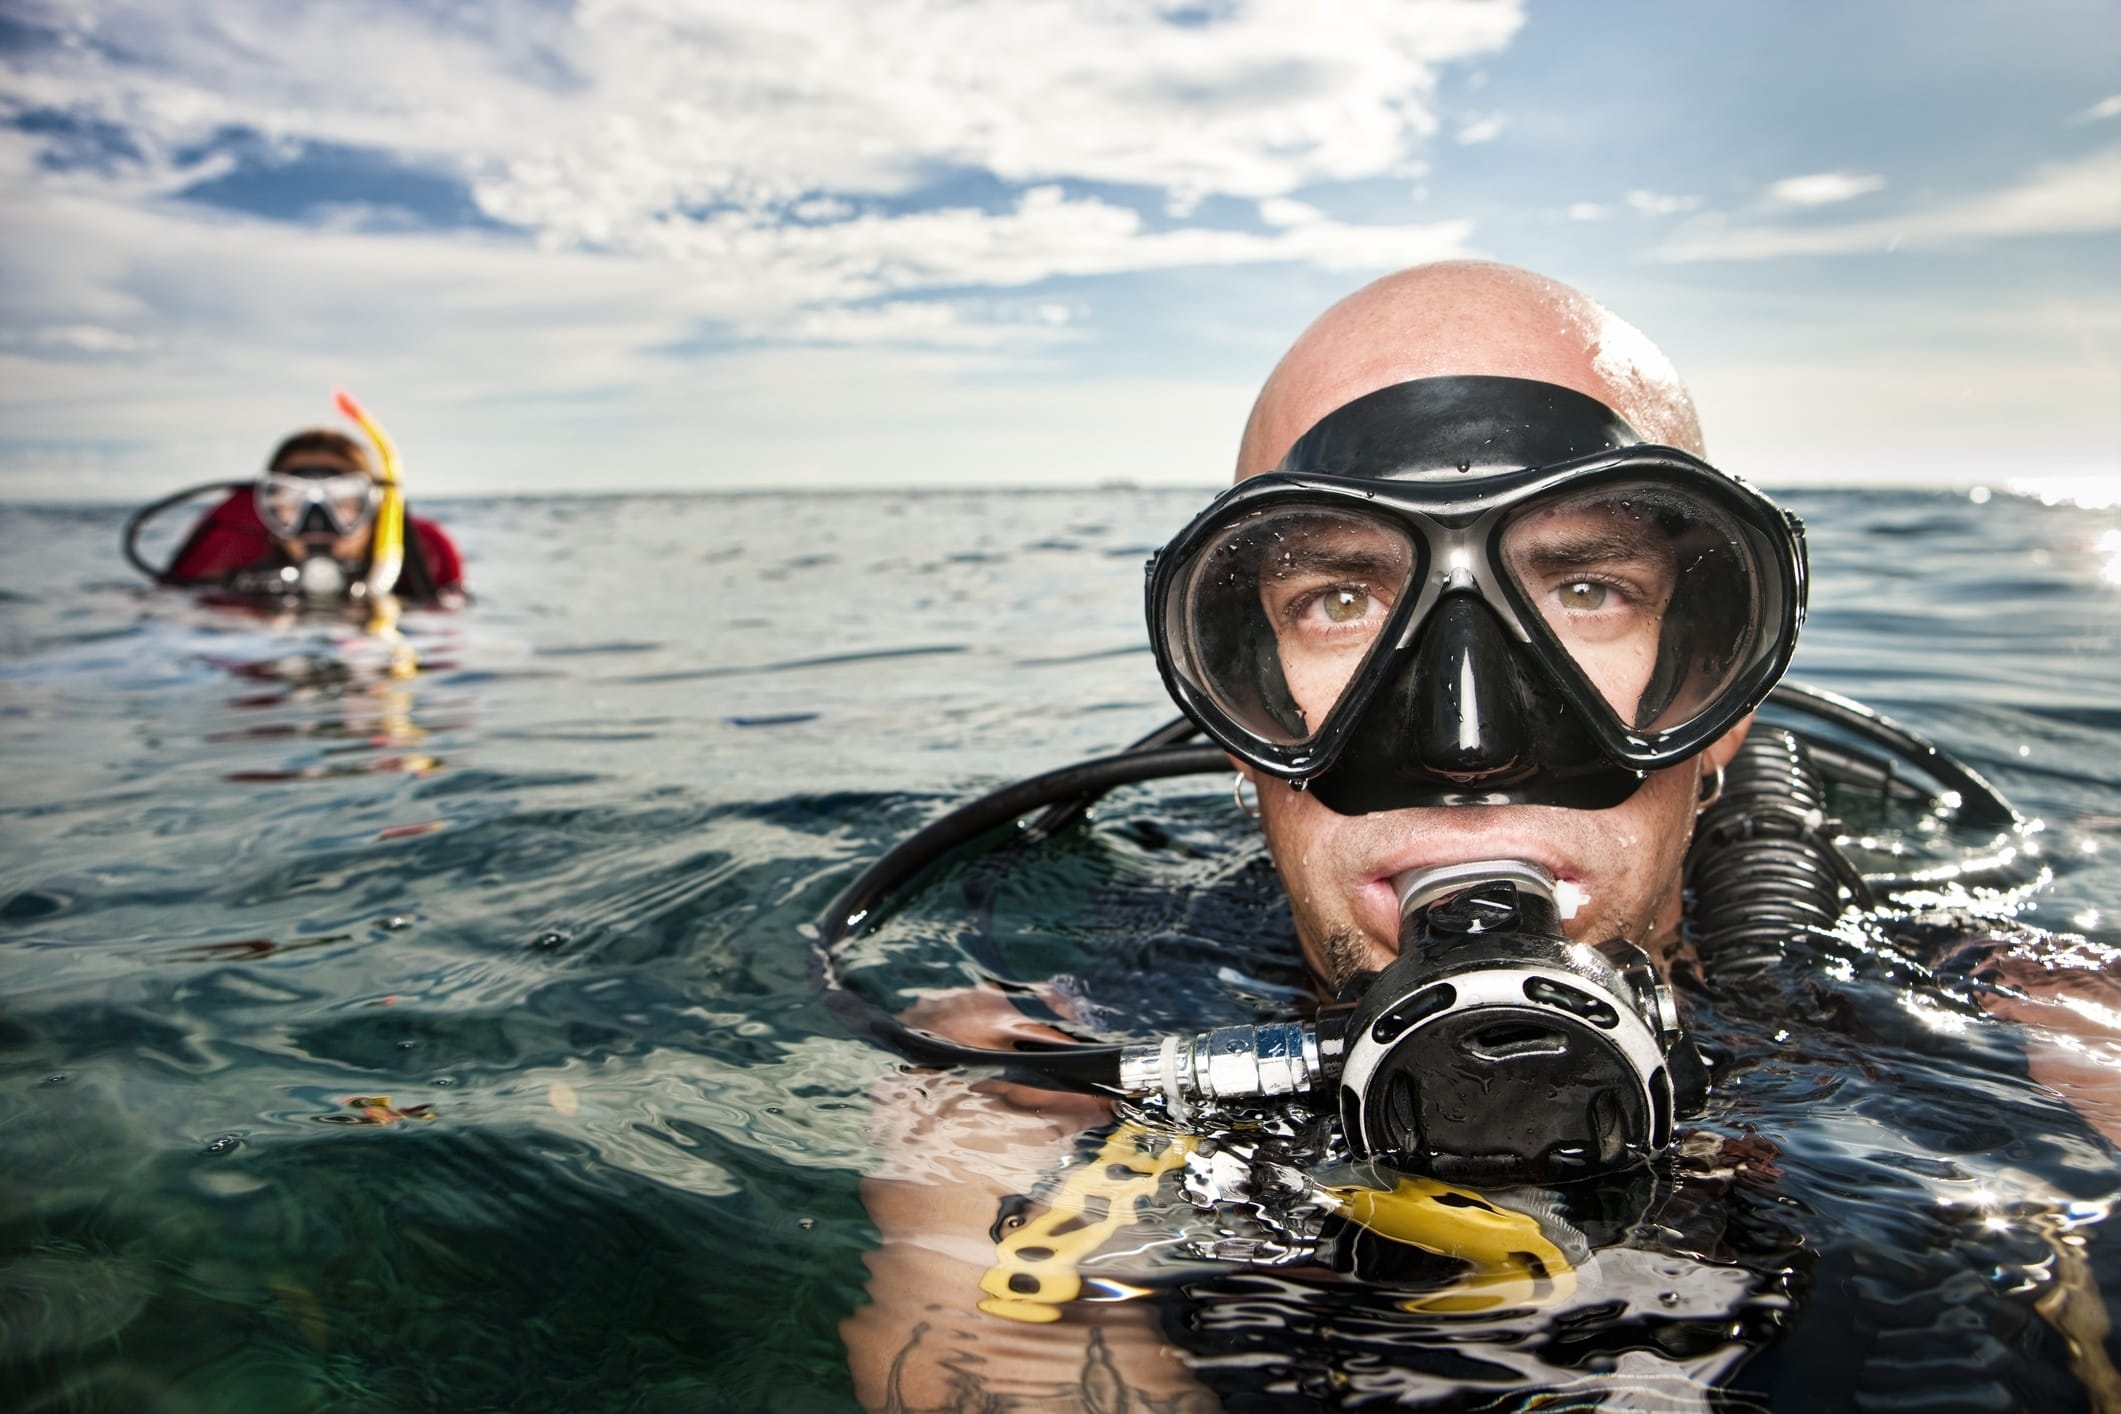 Key West Afternoon 2-Tank Reef Scuba Dive 2021 — Key West Scuba Diving Key West Calendar Of Events October 2021